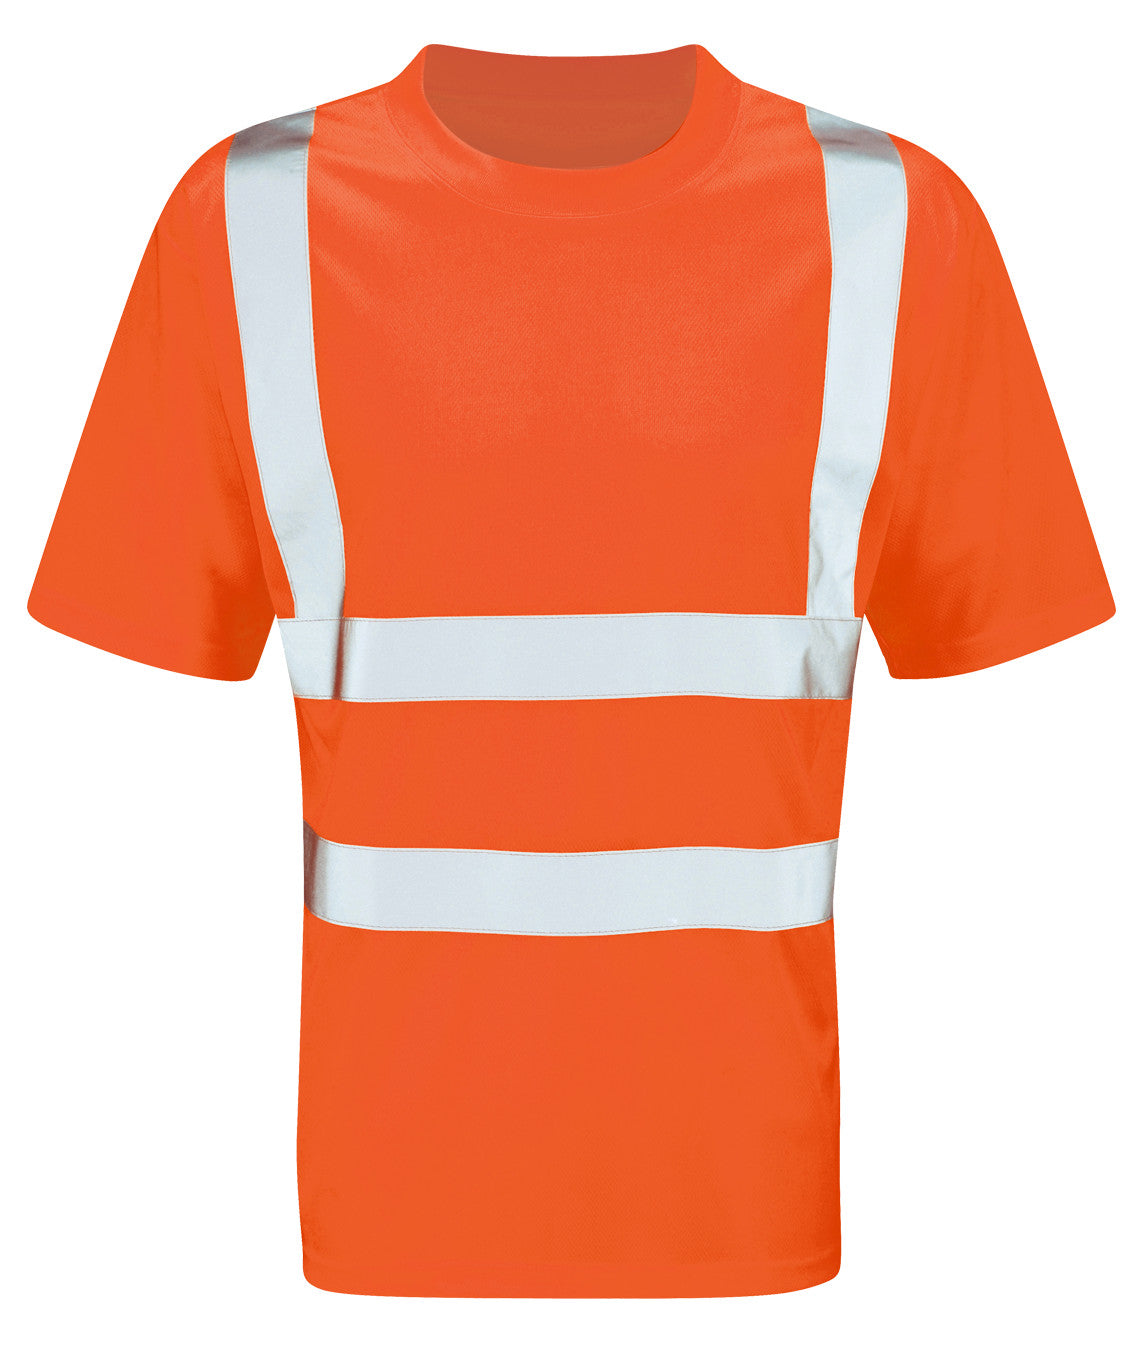 Orbit International HVTEER Viper Men HI Vis Work T-Shirt Orange